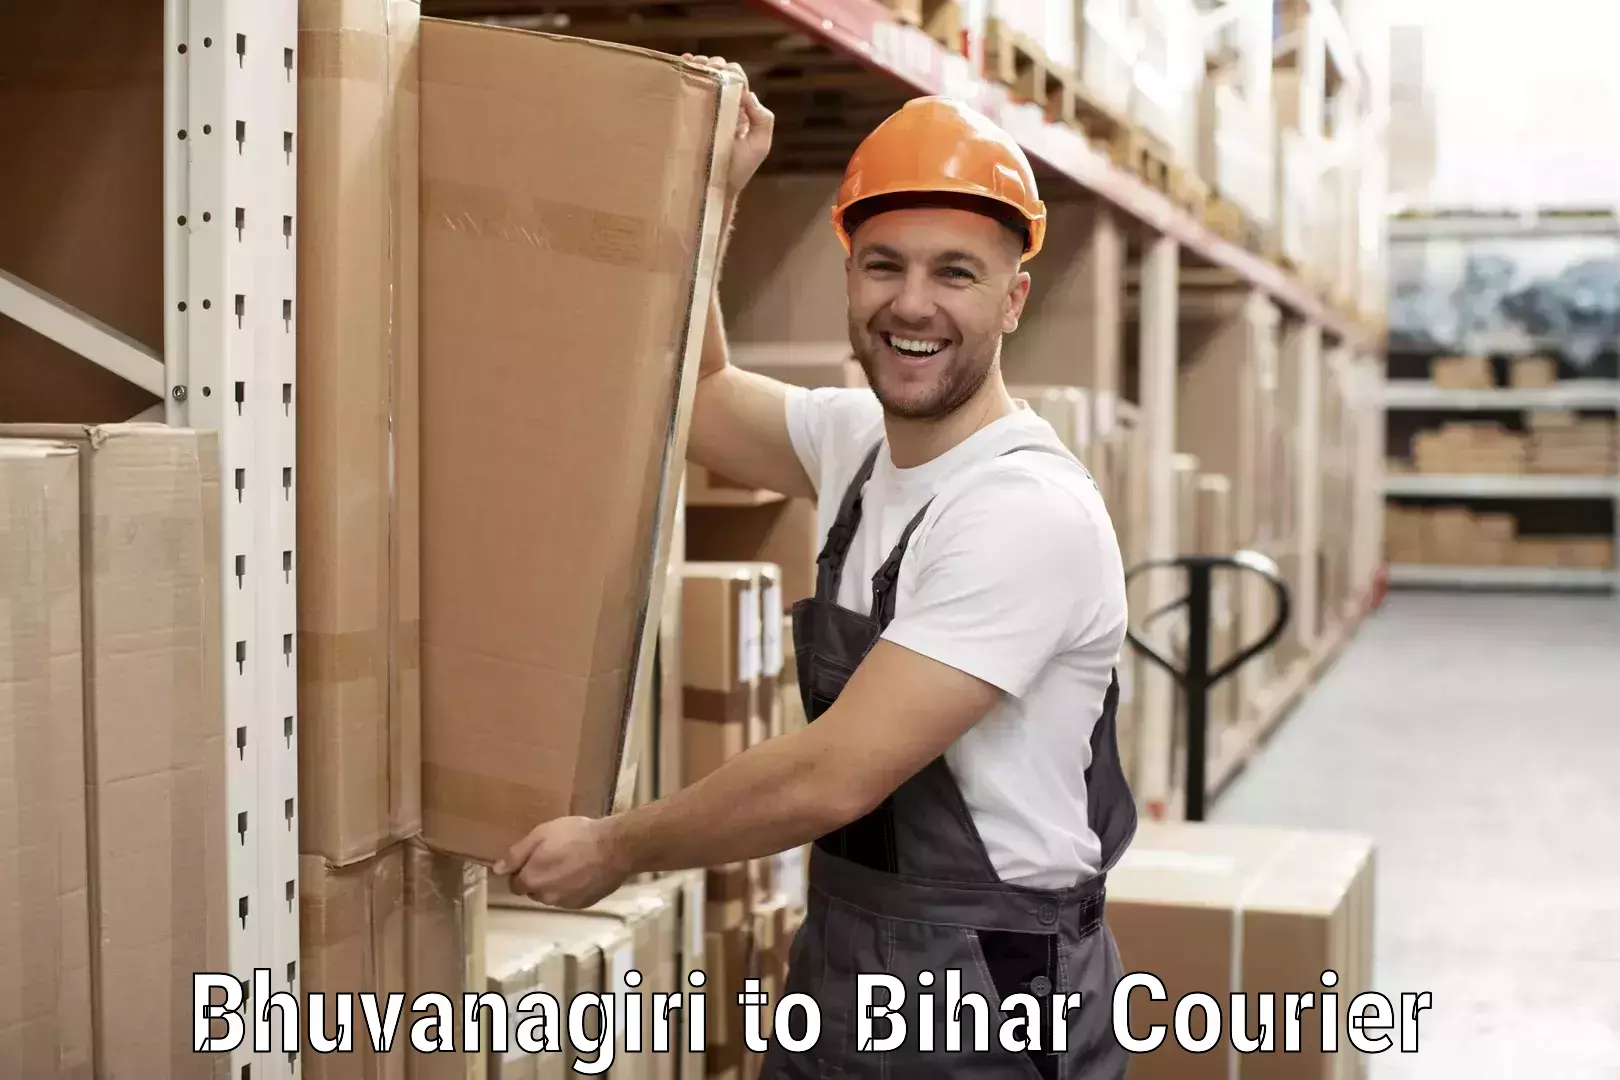 Express delivery capabilities Bhuvanagiri to Sharfuddinpur